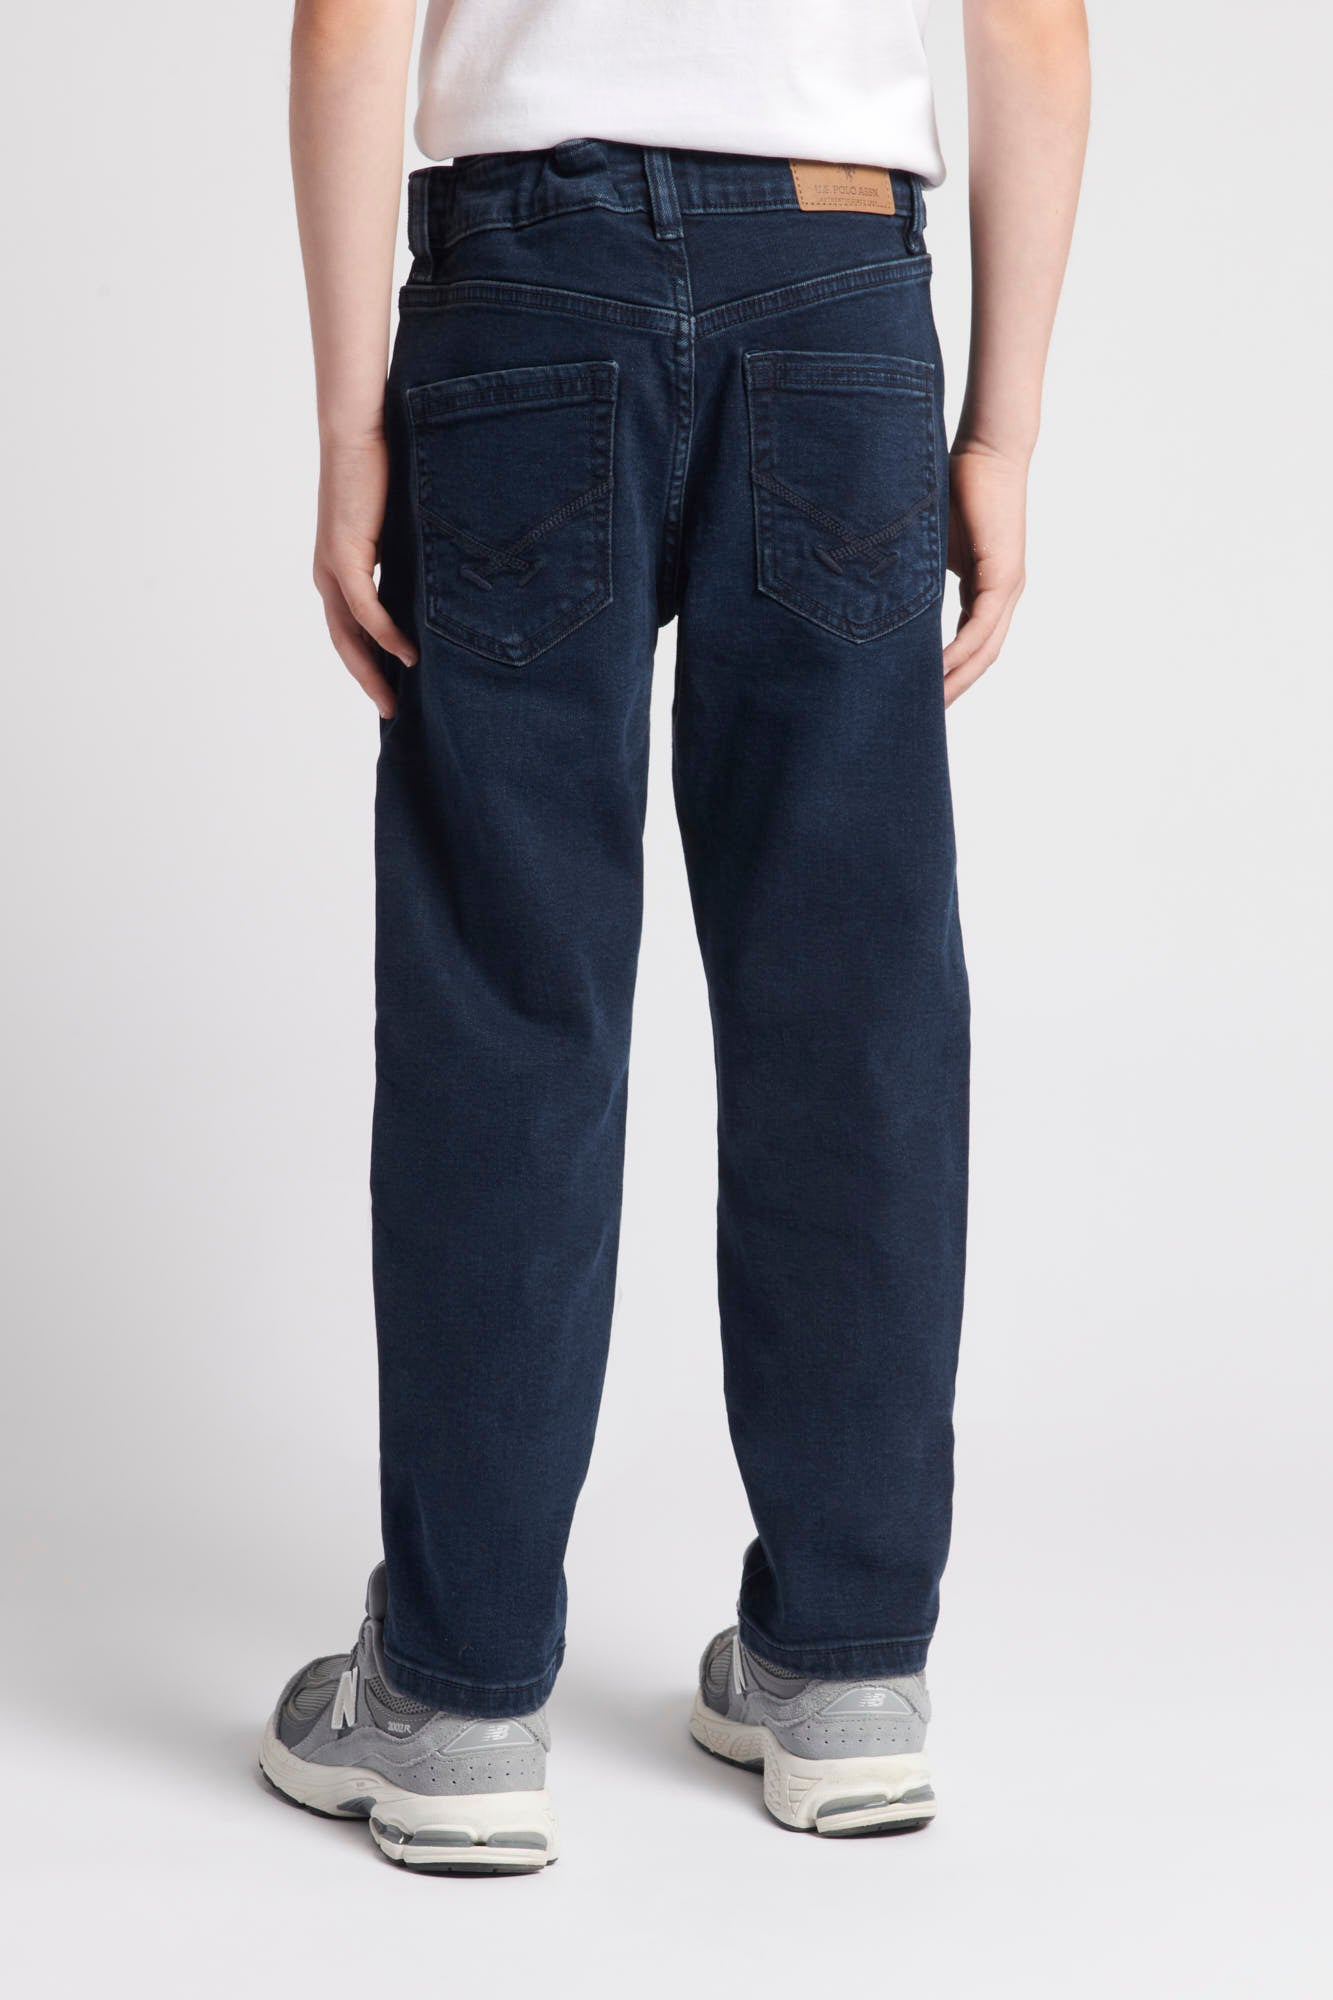 Boys 5 Pocket Slim Fit Denim Jeans in Dark Vintage Wash